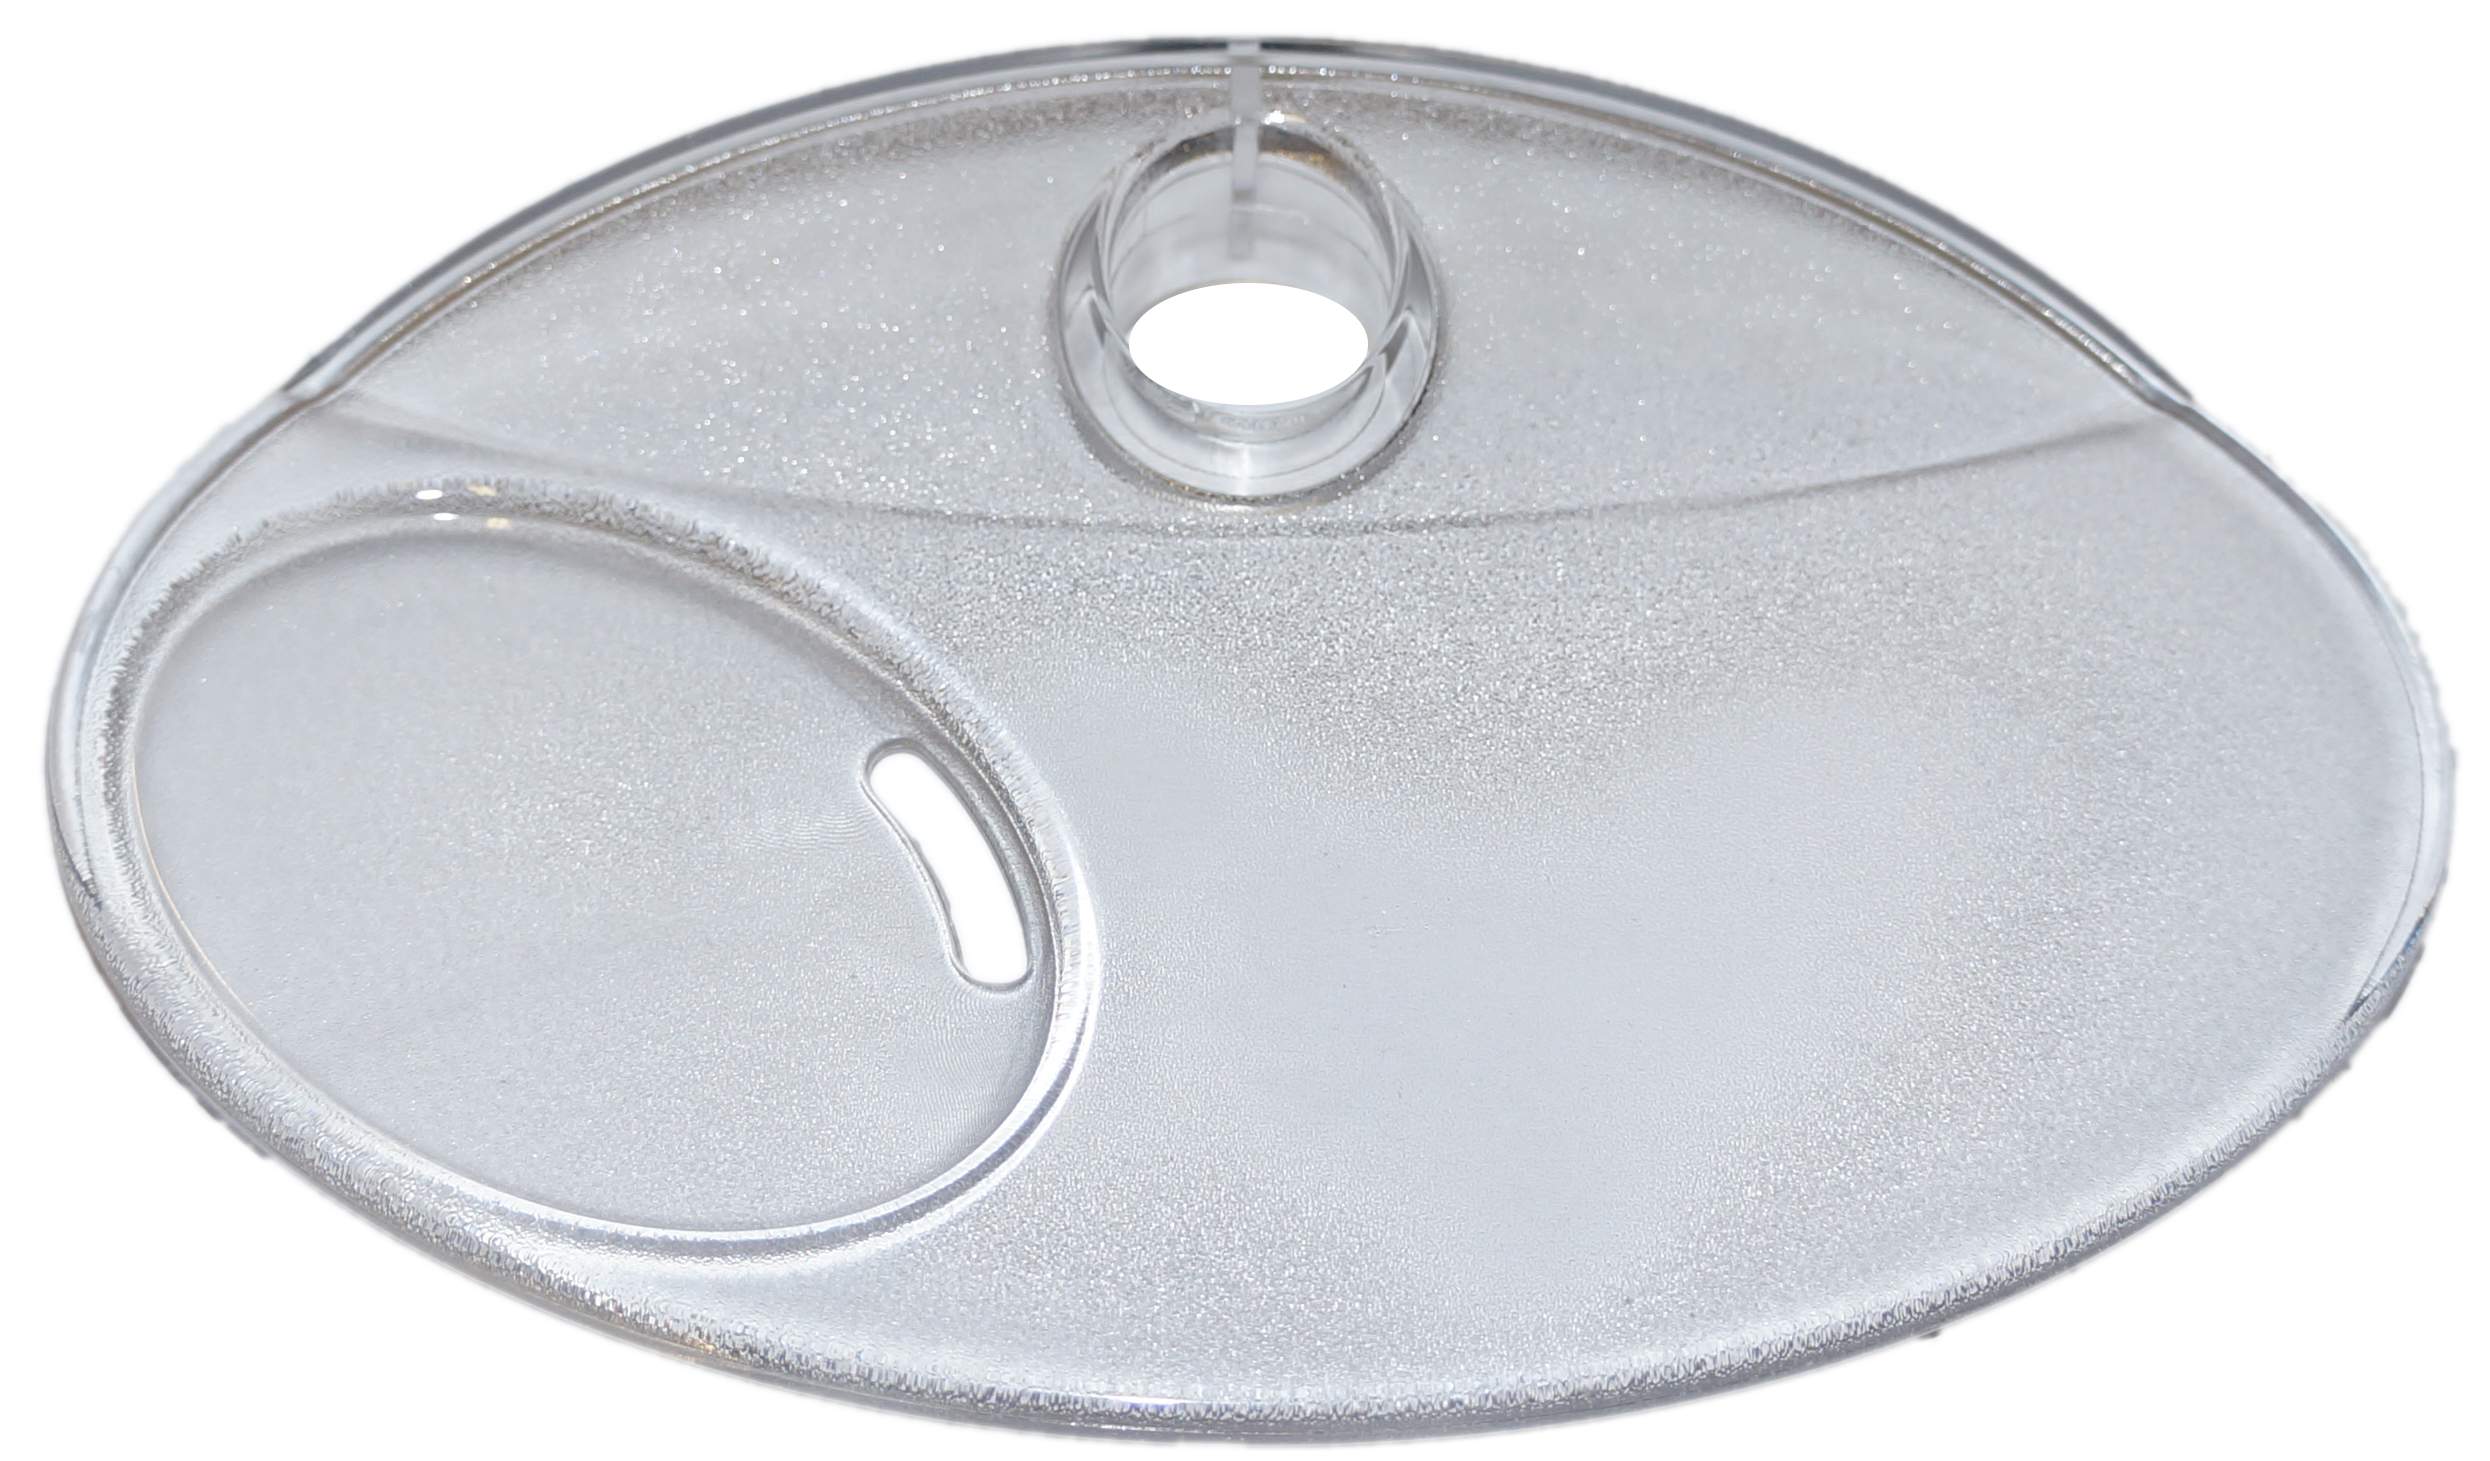 Crystal soap dish for 22 mm diameter shower bar